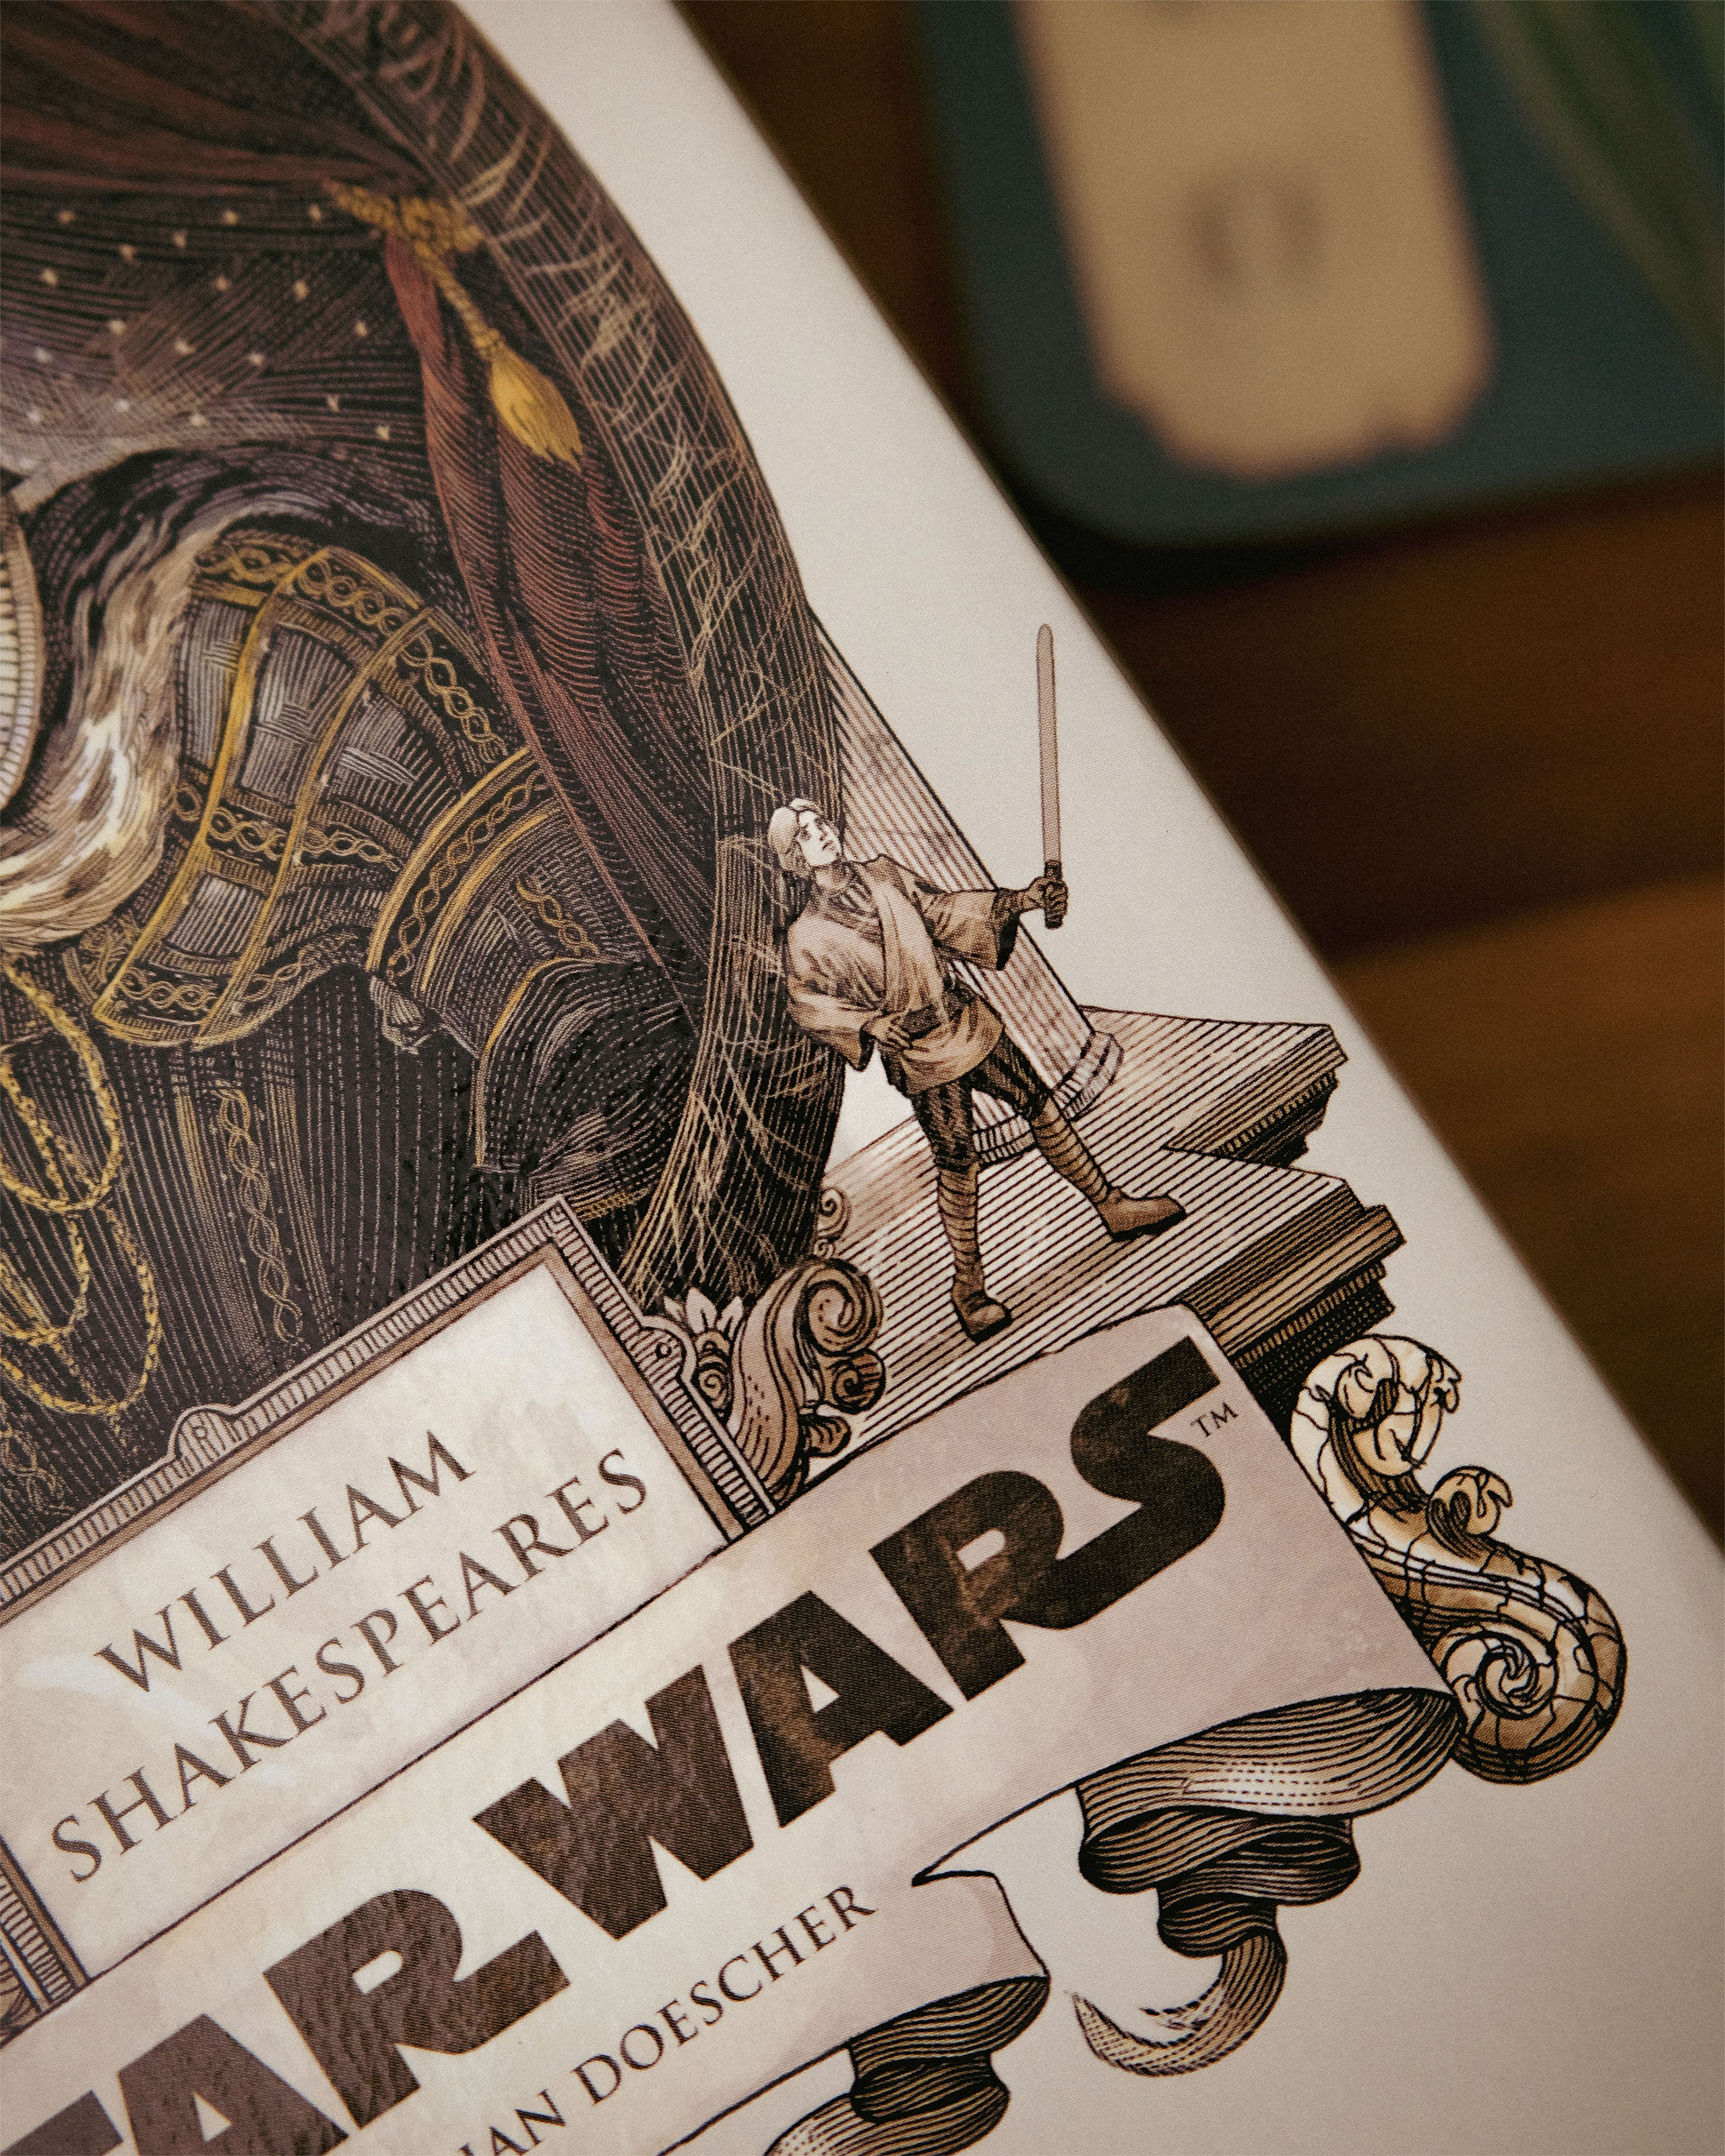 William Shakespeare's Star Wars - Vraiment, Un Nouvel Espoir